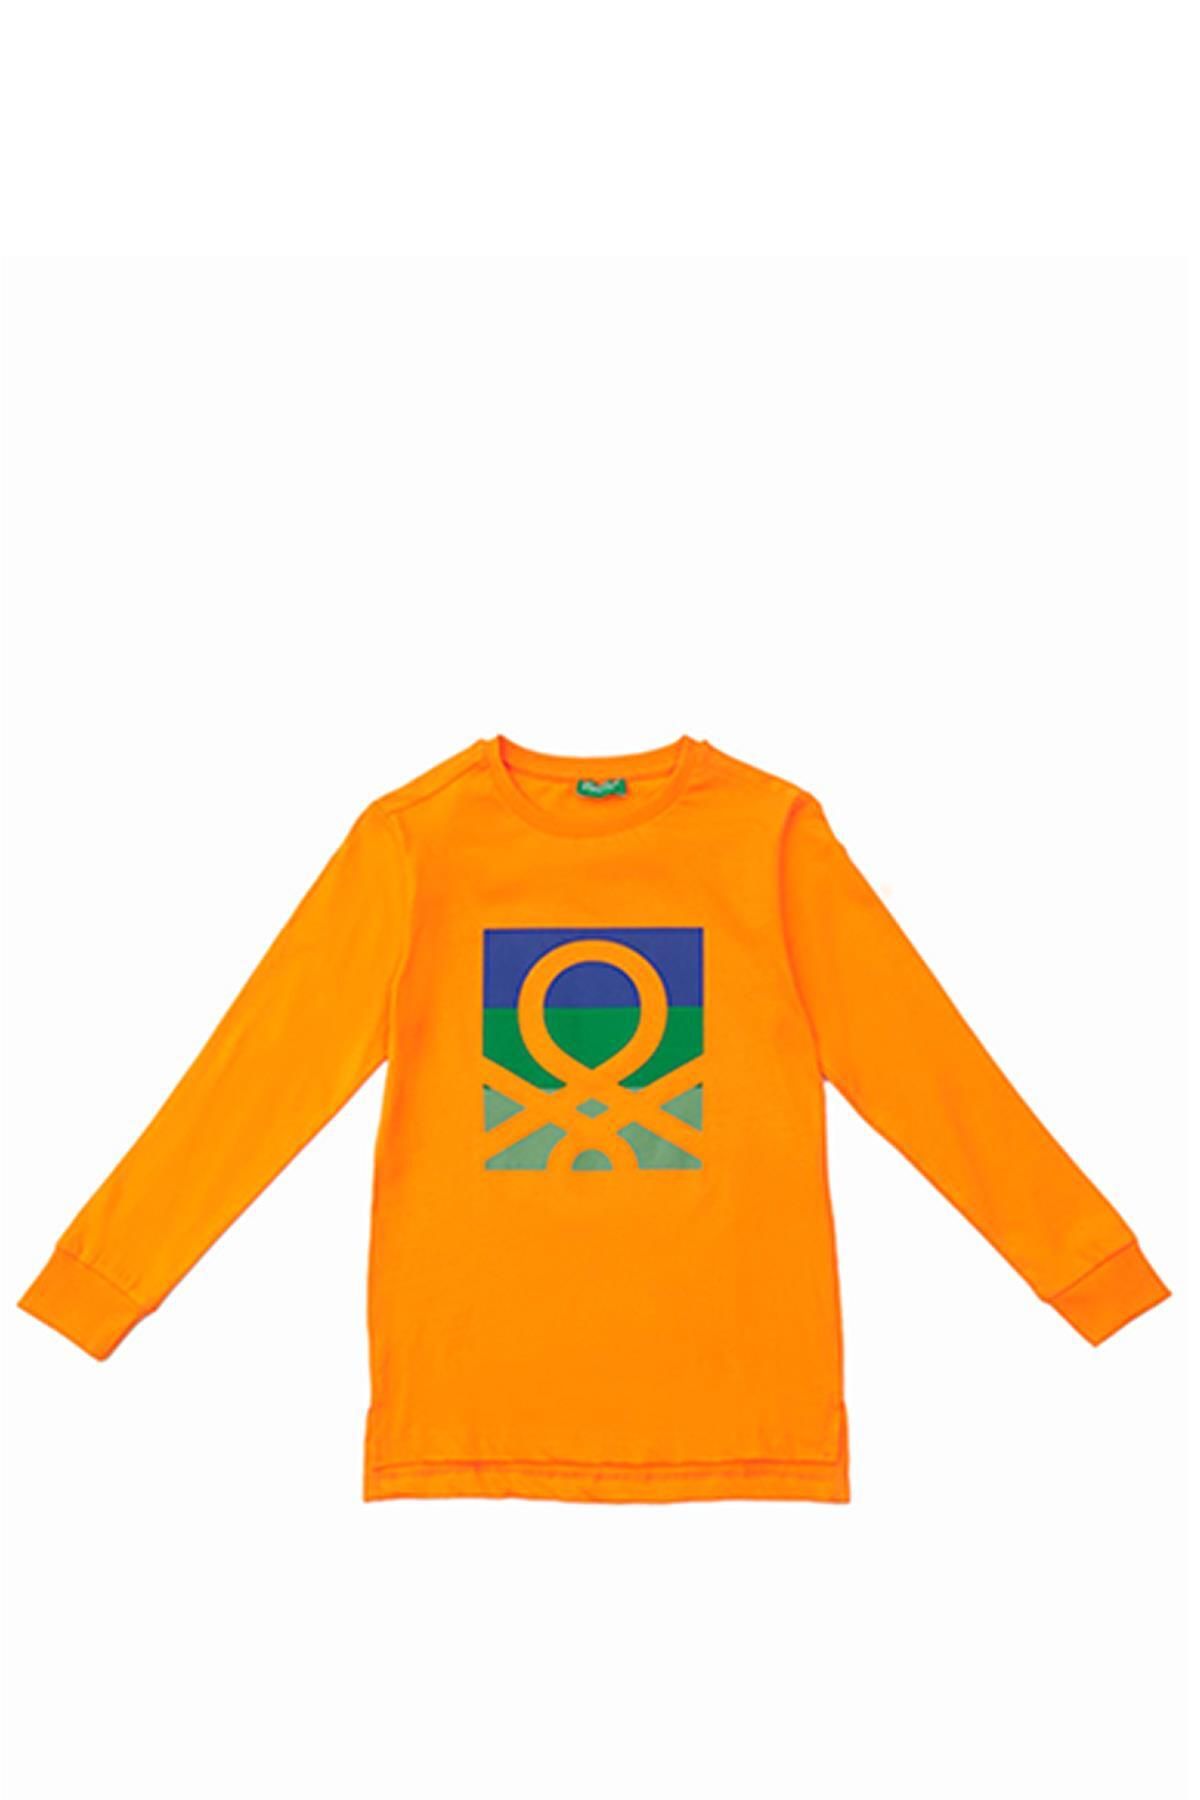 United Colors of Benetton Erkek Çocuk Tshirt Bnt-b20887